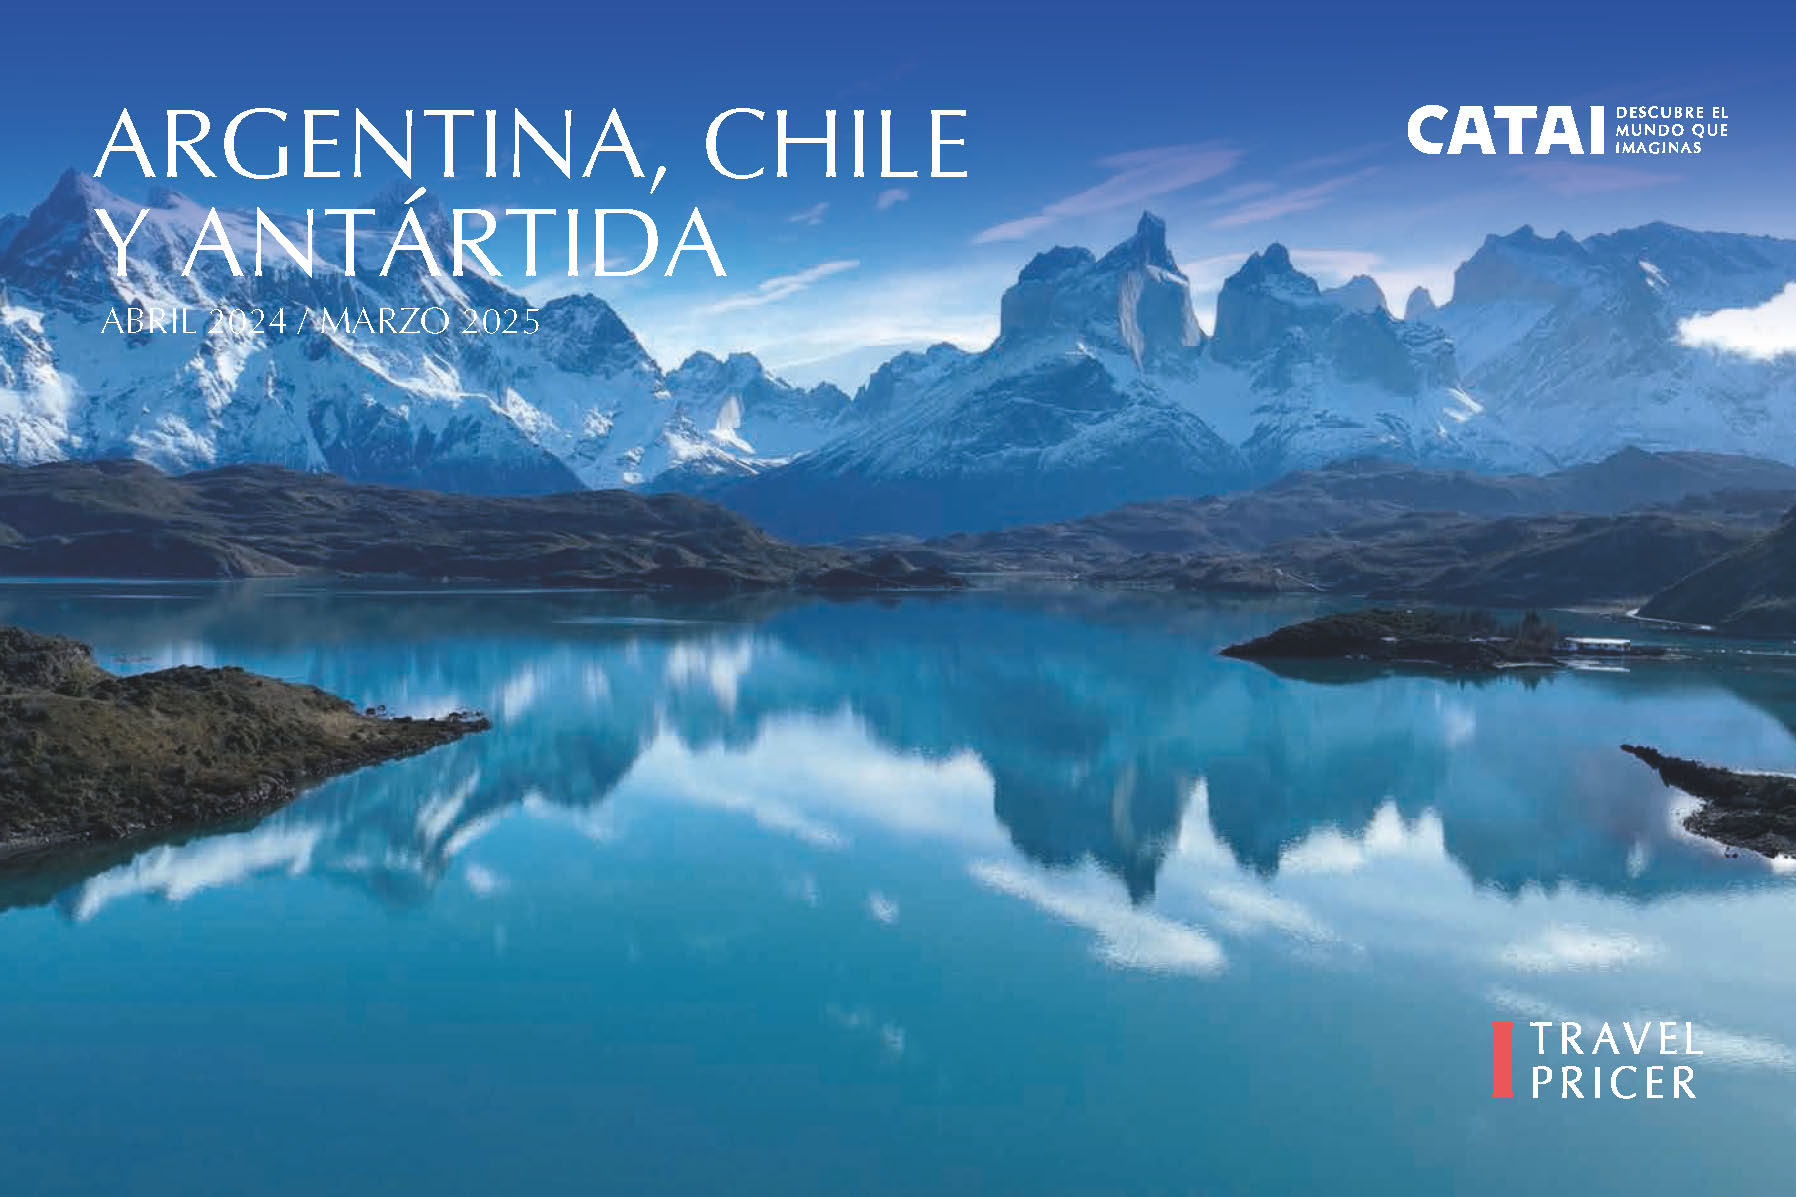 Catalogo Catai Circuitos Argentina Chile y Antartida 2024-2025